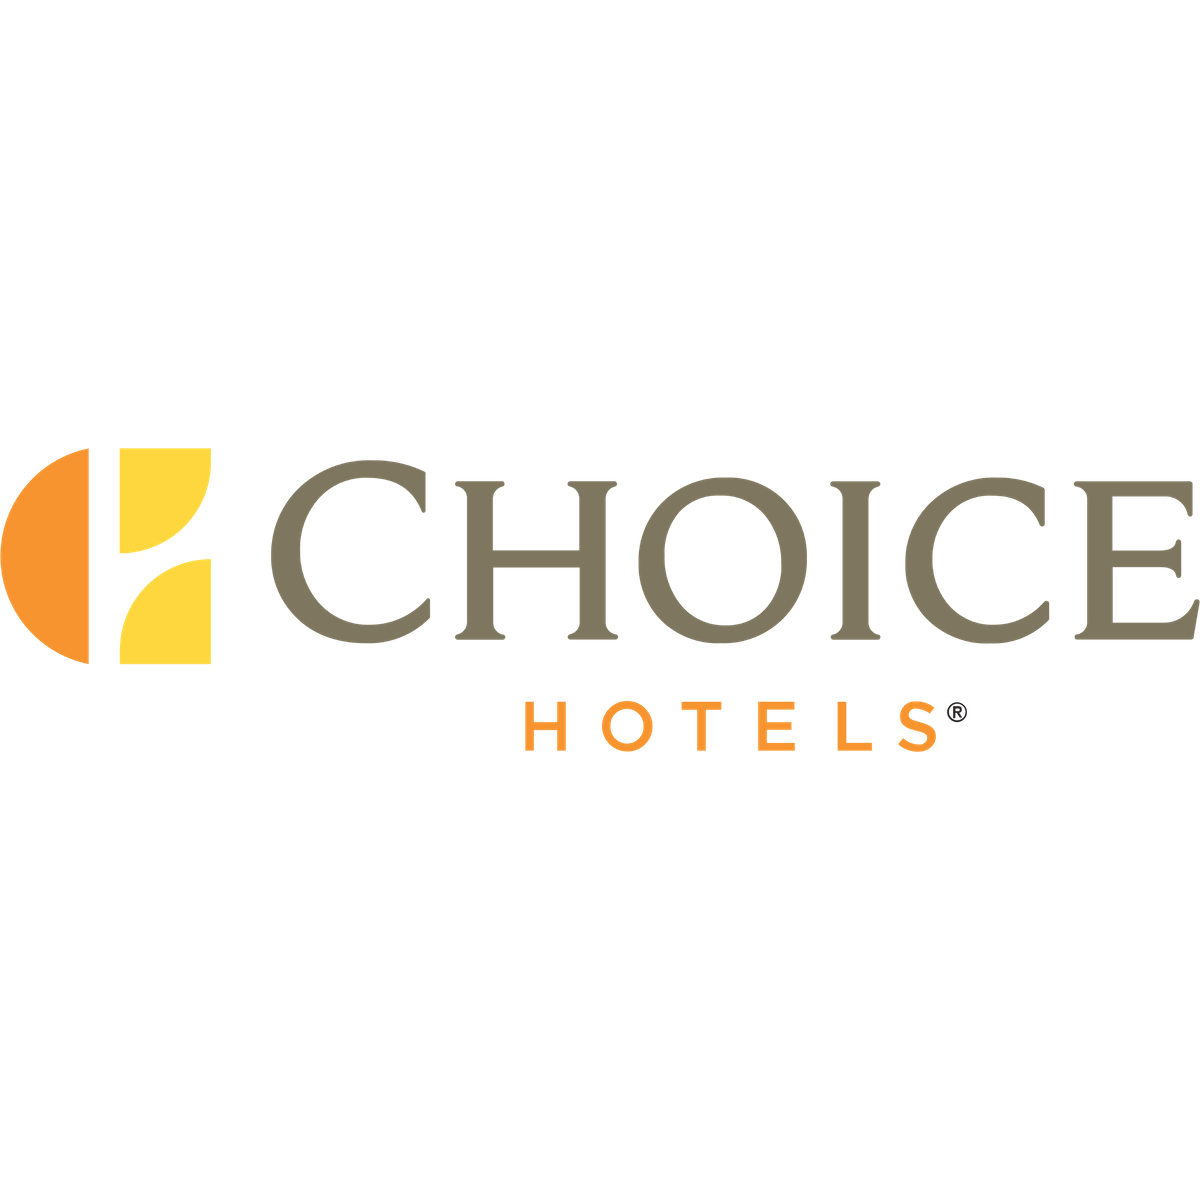 CHOICE-Hotels-LOGO-02